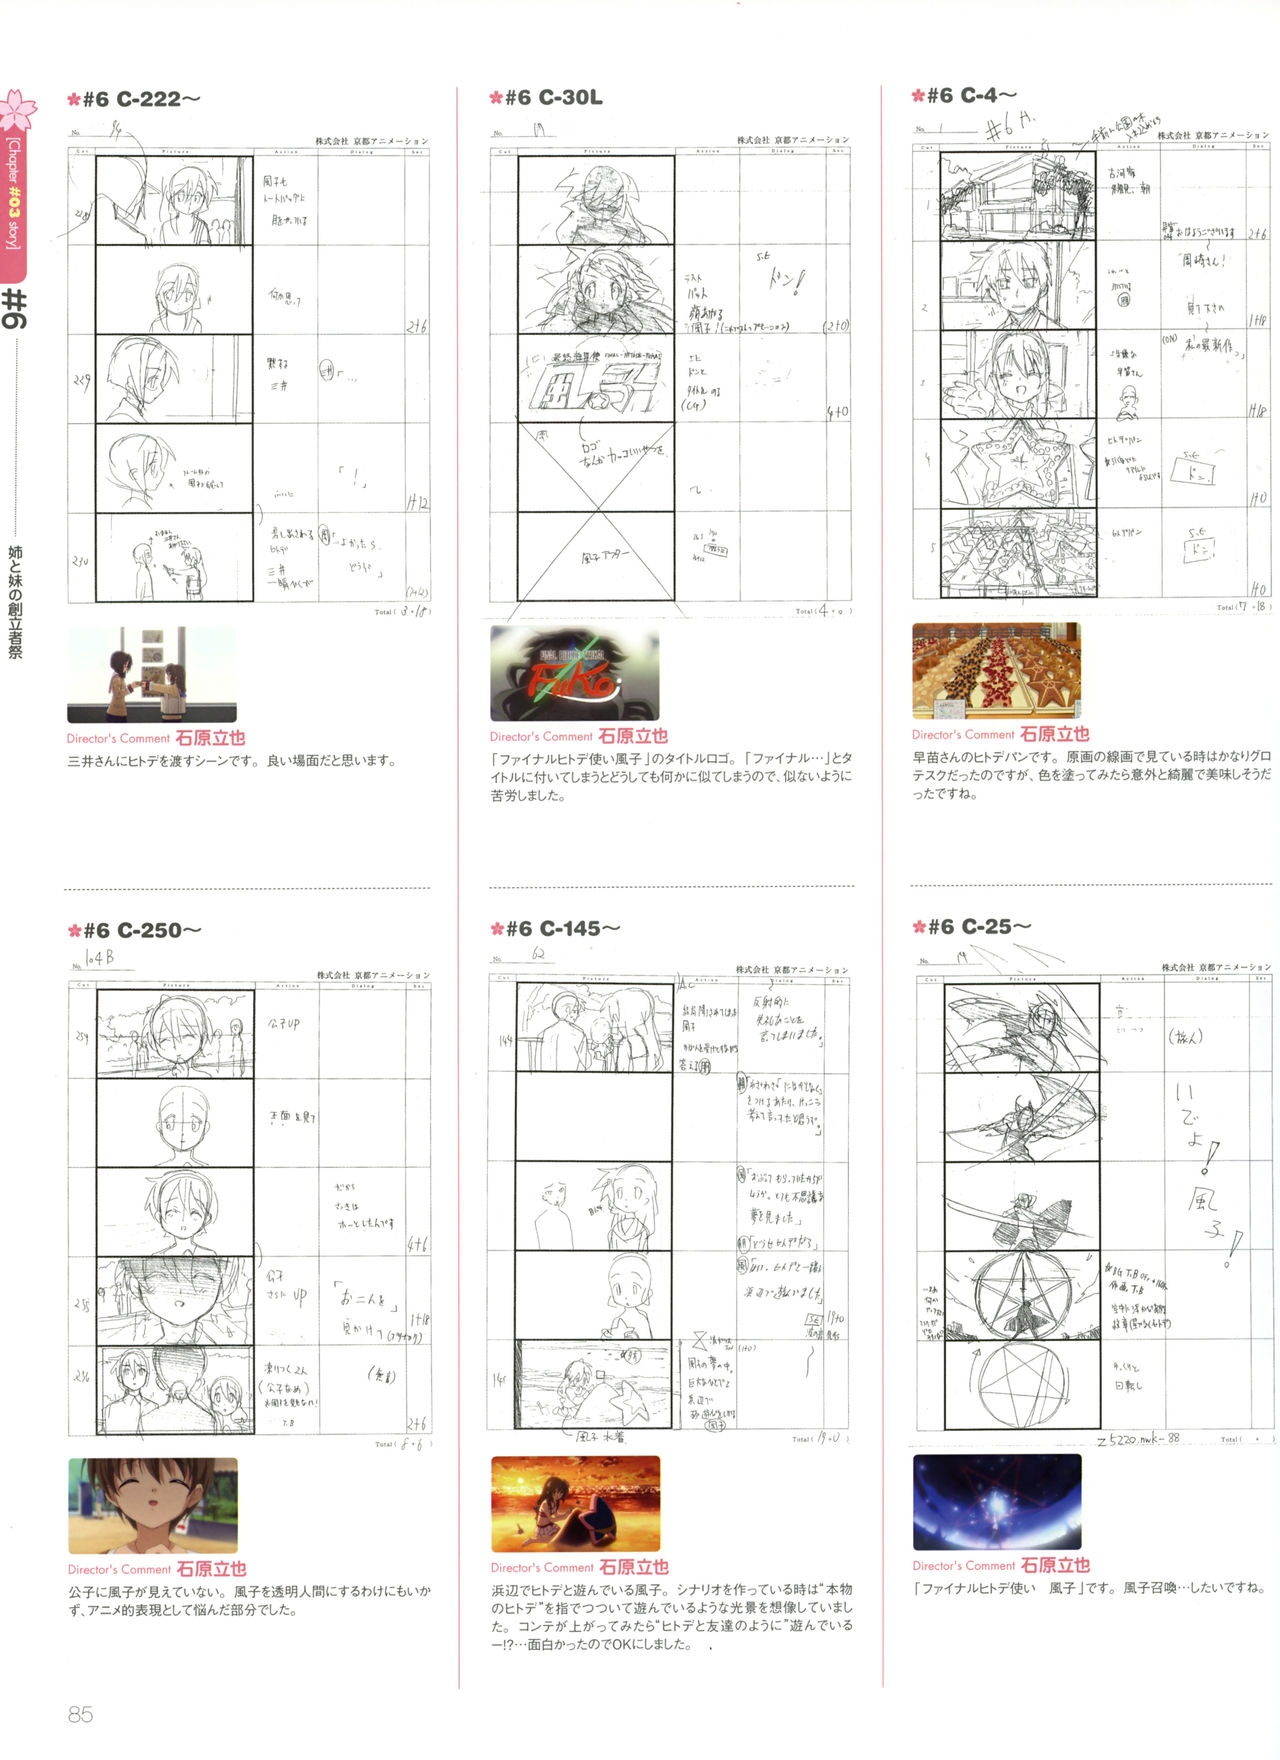 Clannad TV Animation Visual Fan Book 88